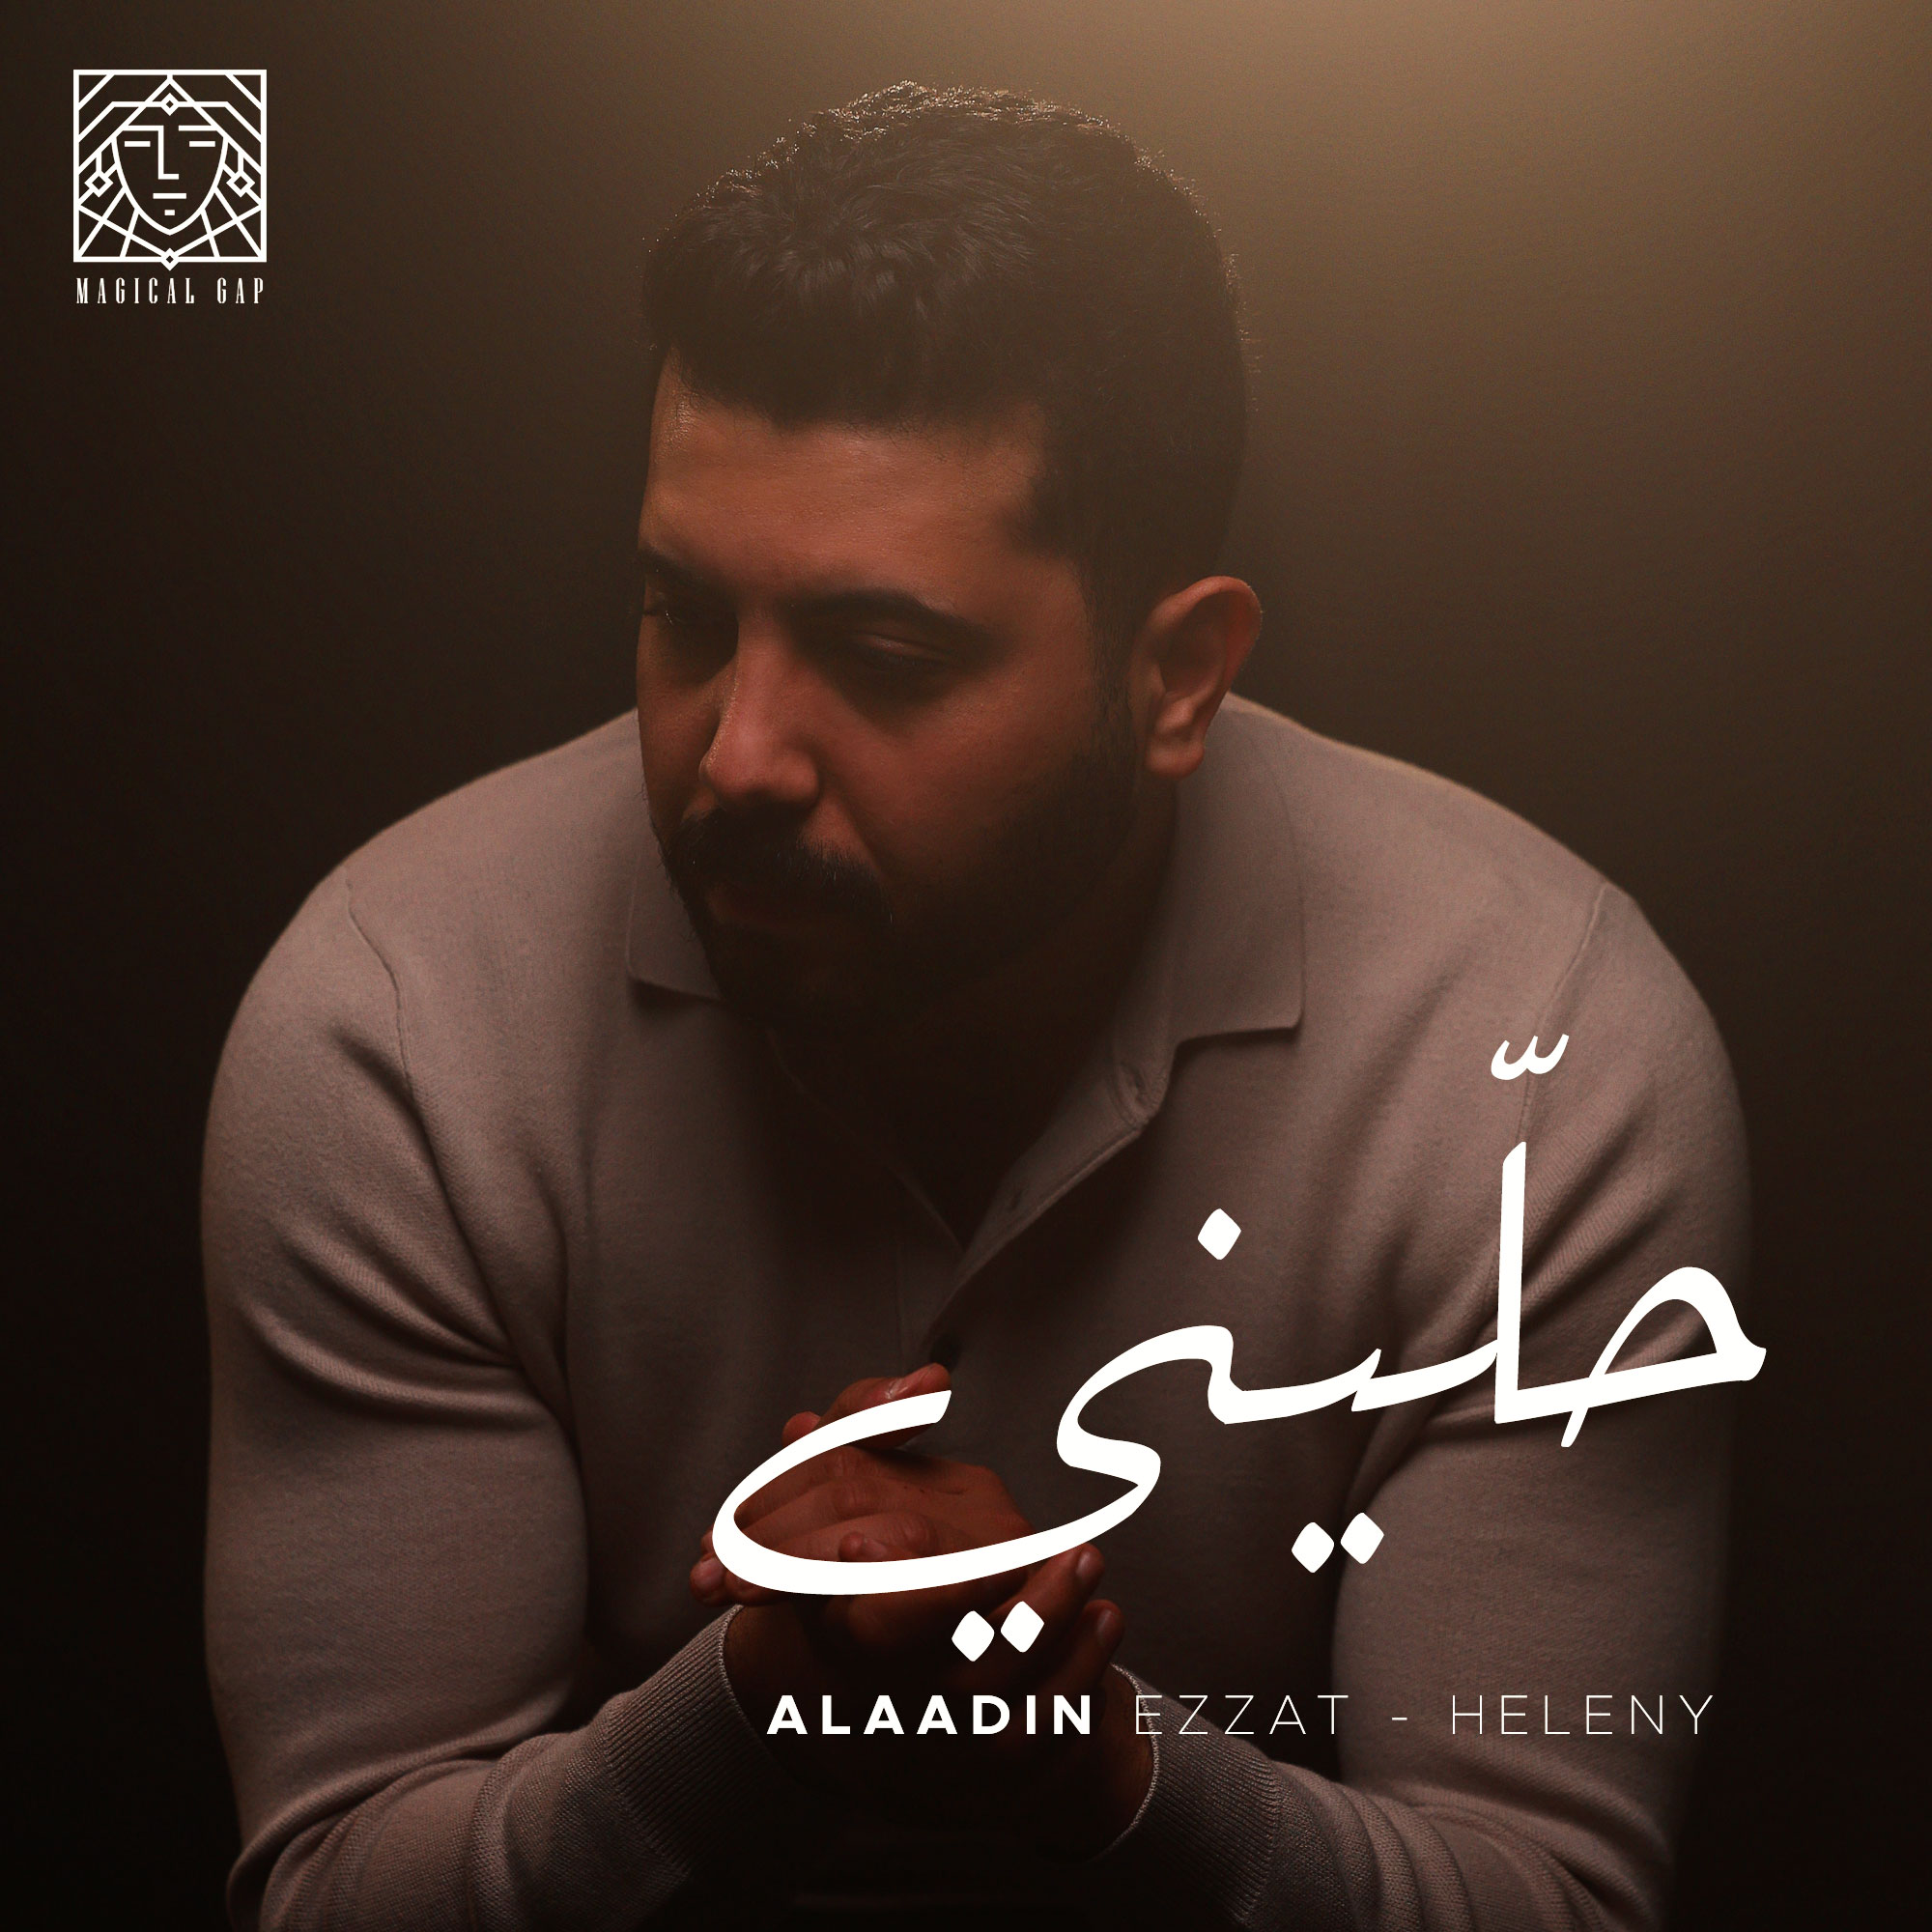 Aladdin Ezzat - Heleny